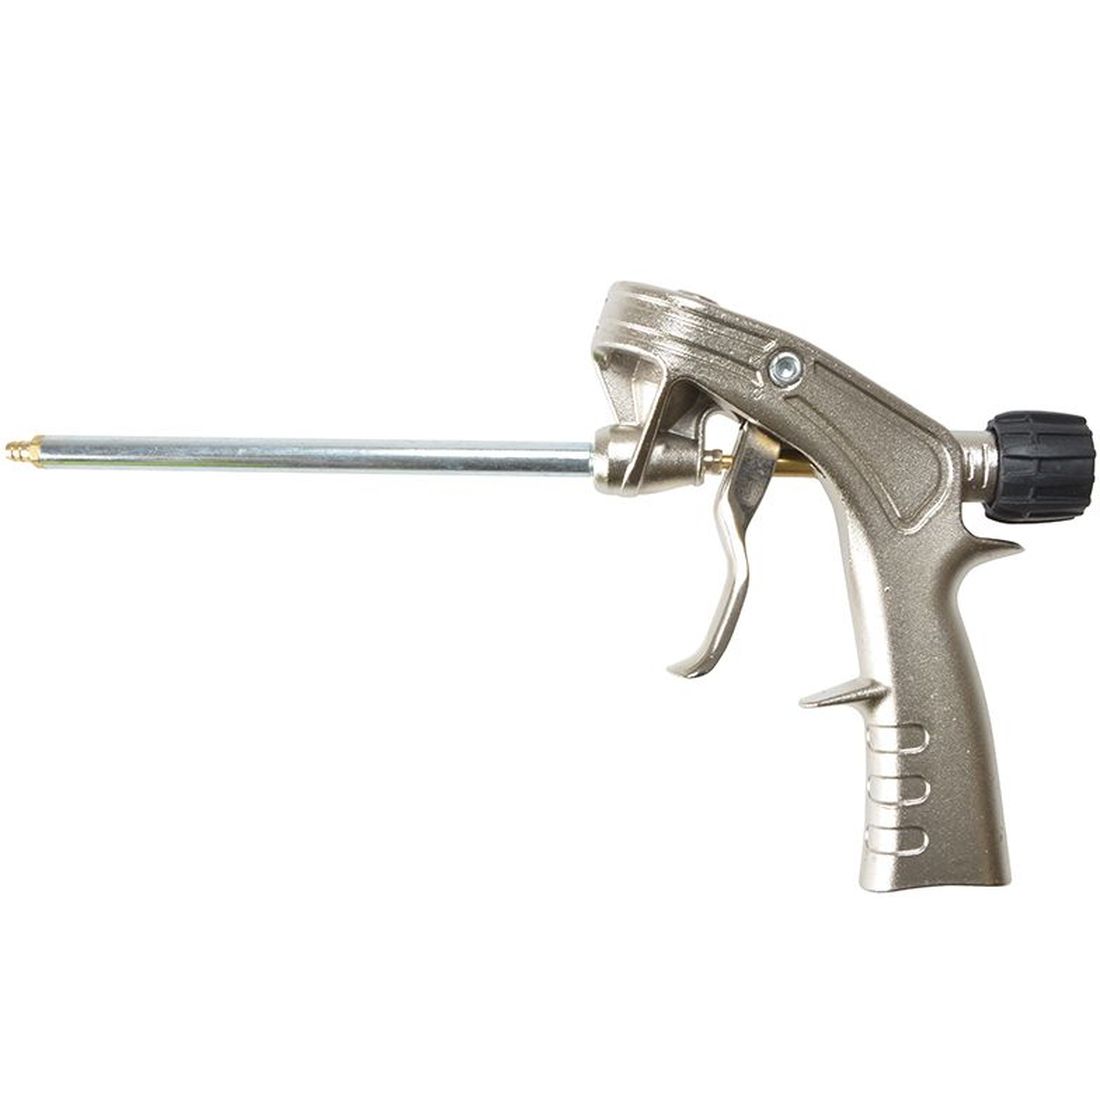 Everbuild Pinkgrip Dry Fix Applicator Gun   